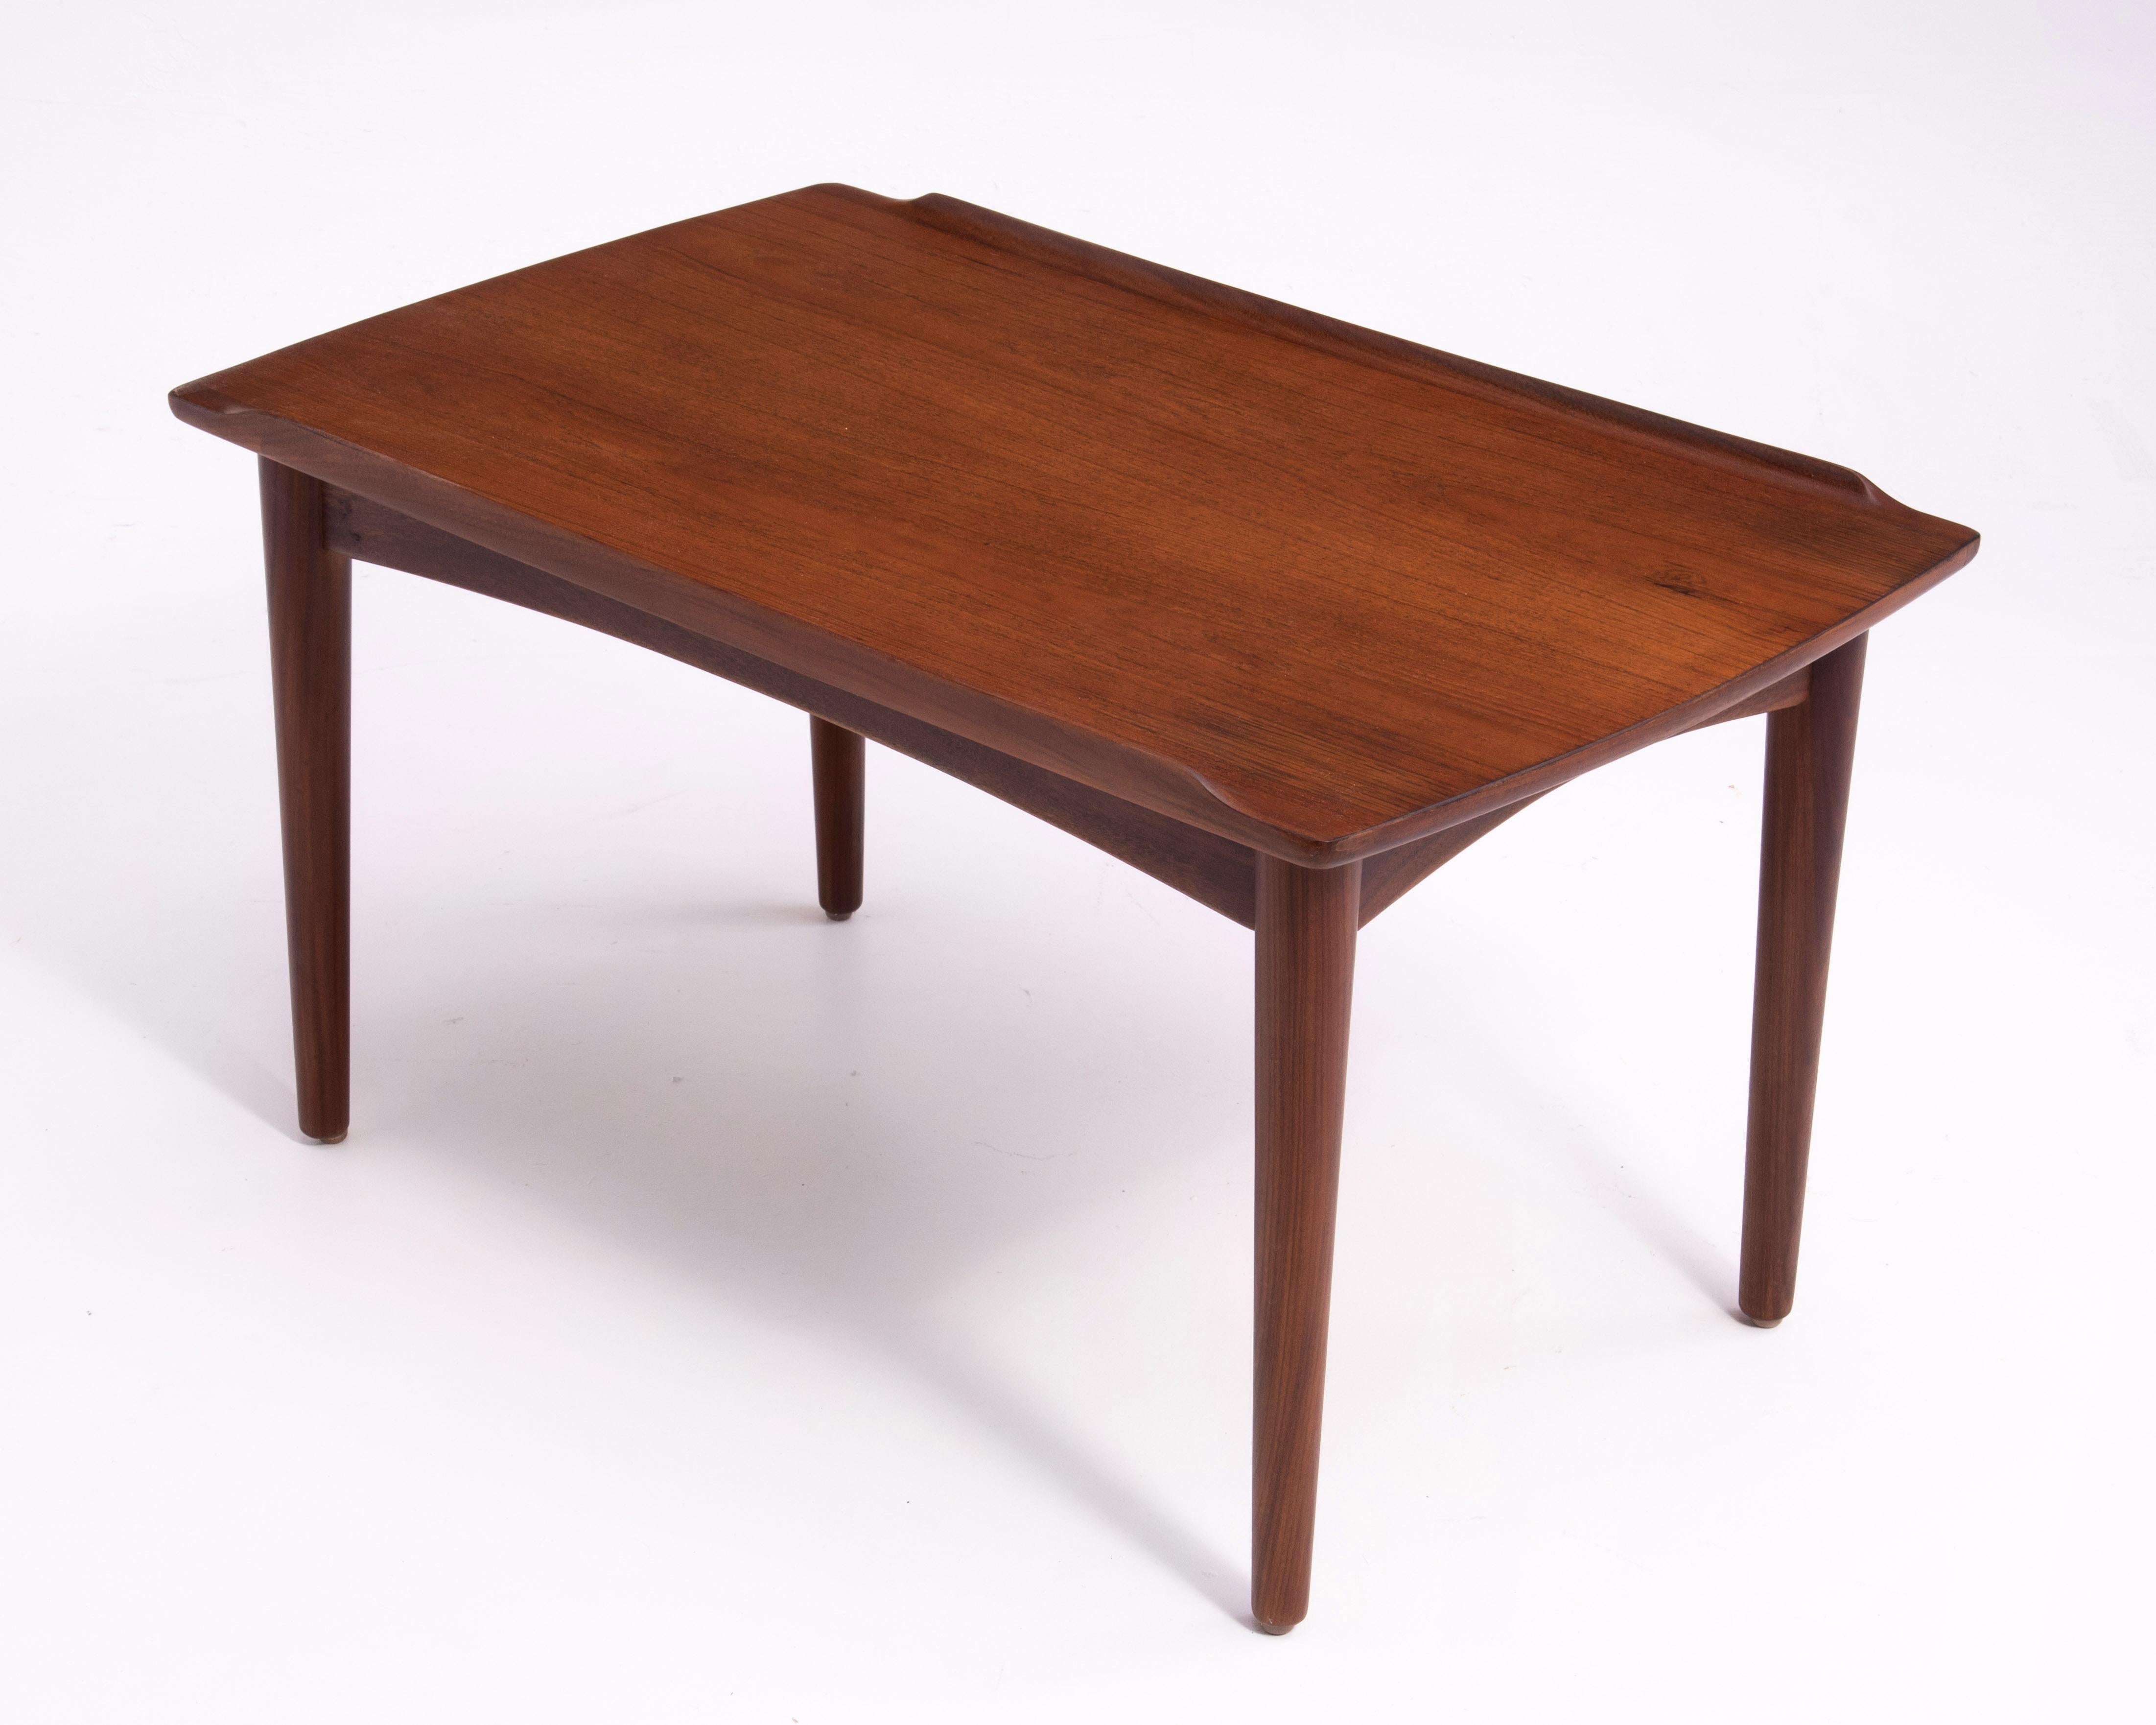 Late 20th Century Danish Modern Teak Dowel Leg Side Table After Grete Jalk Marked B. J. 1970s For Sale